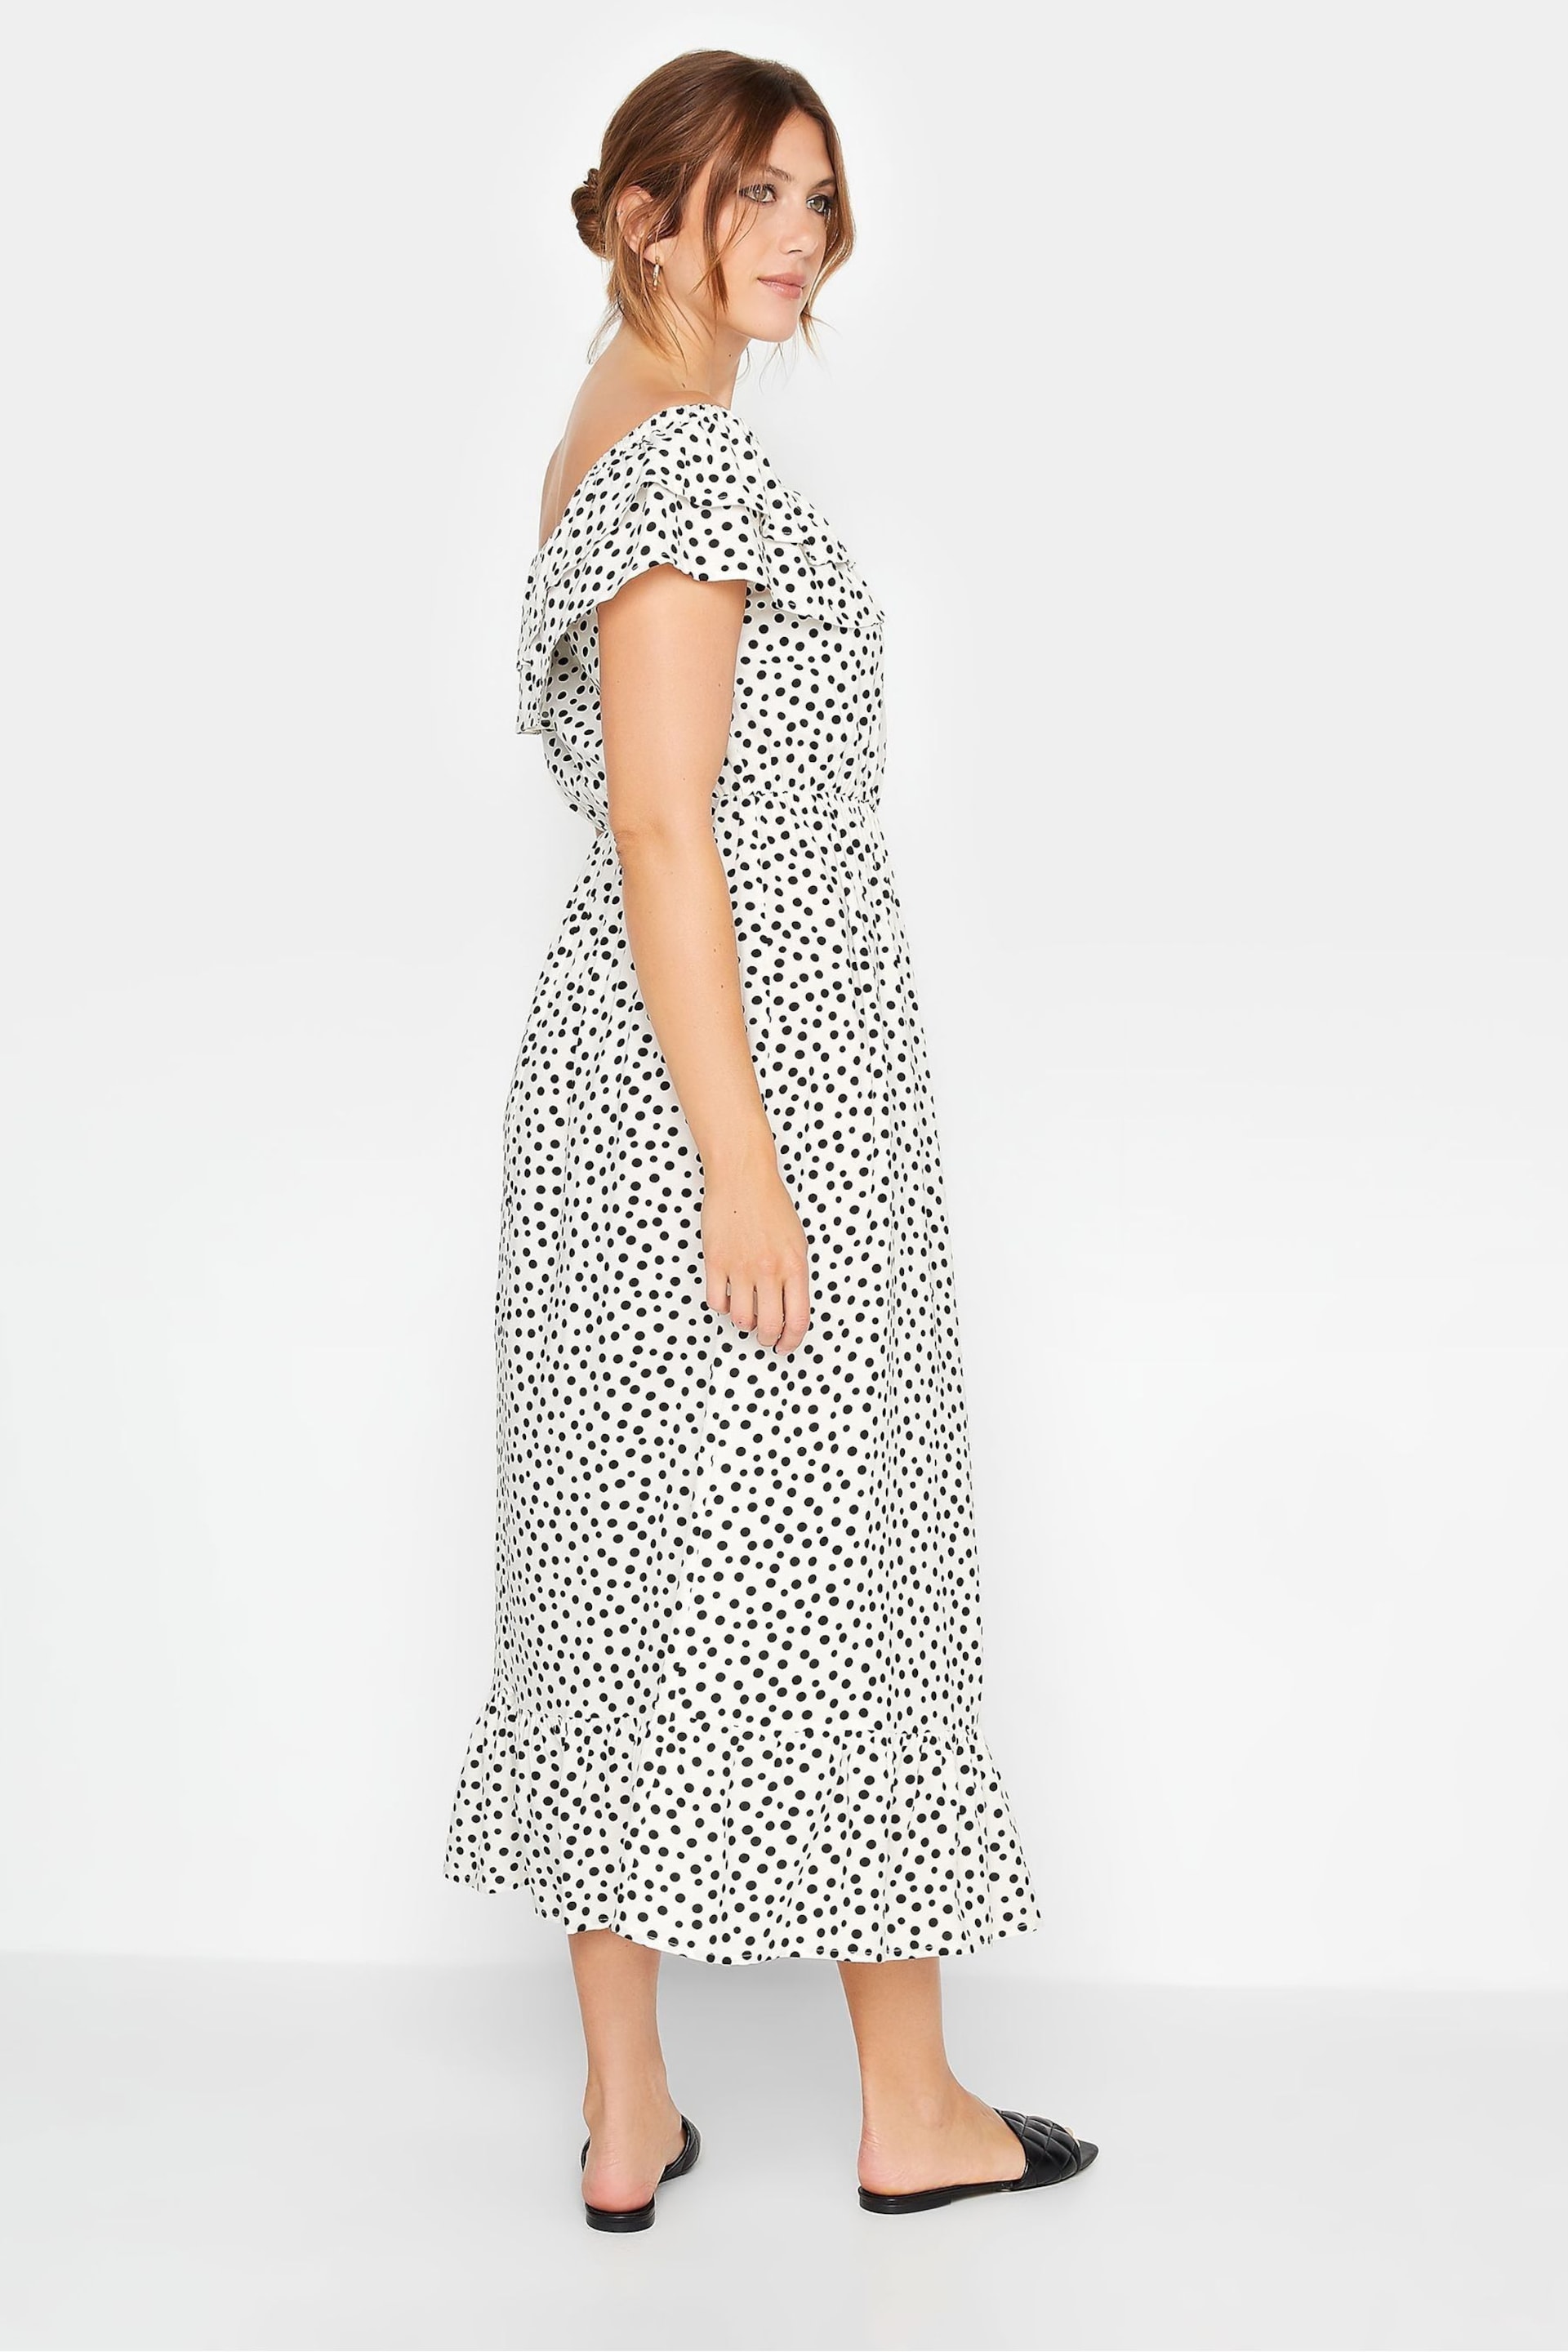 Long Tall Sally Cream Printed Maxi Dress - Image 2 of 4